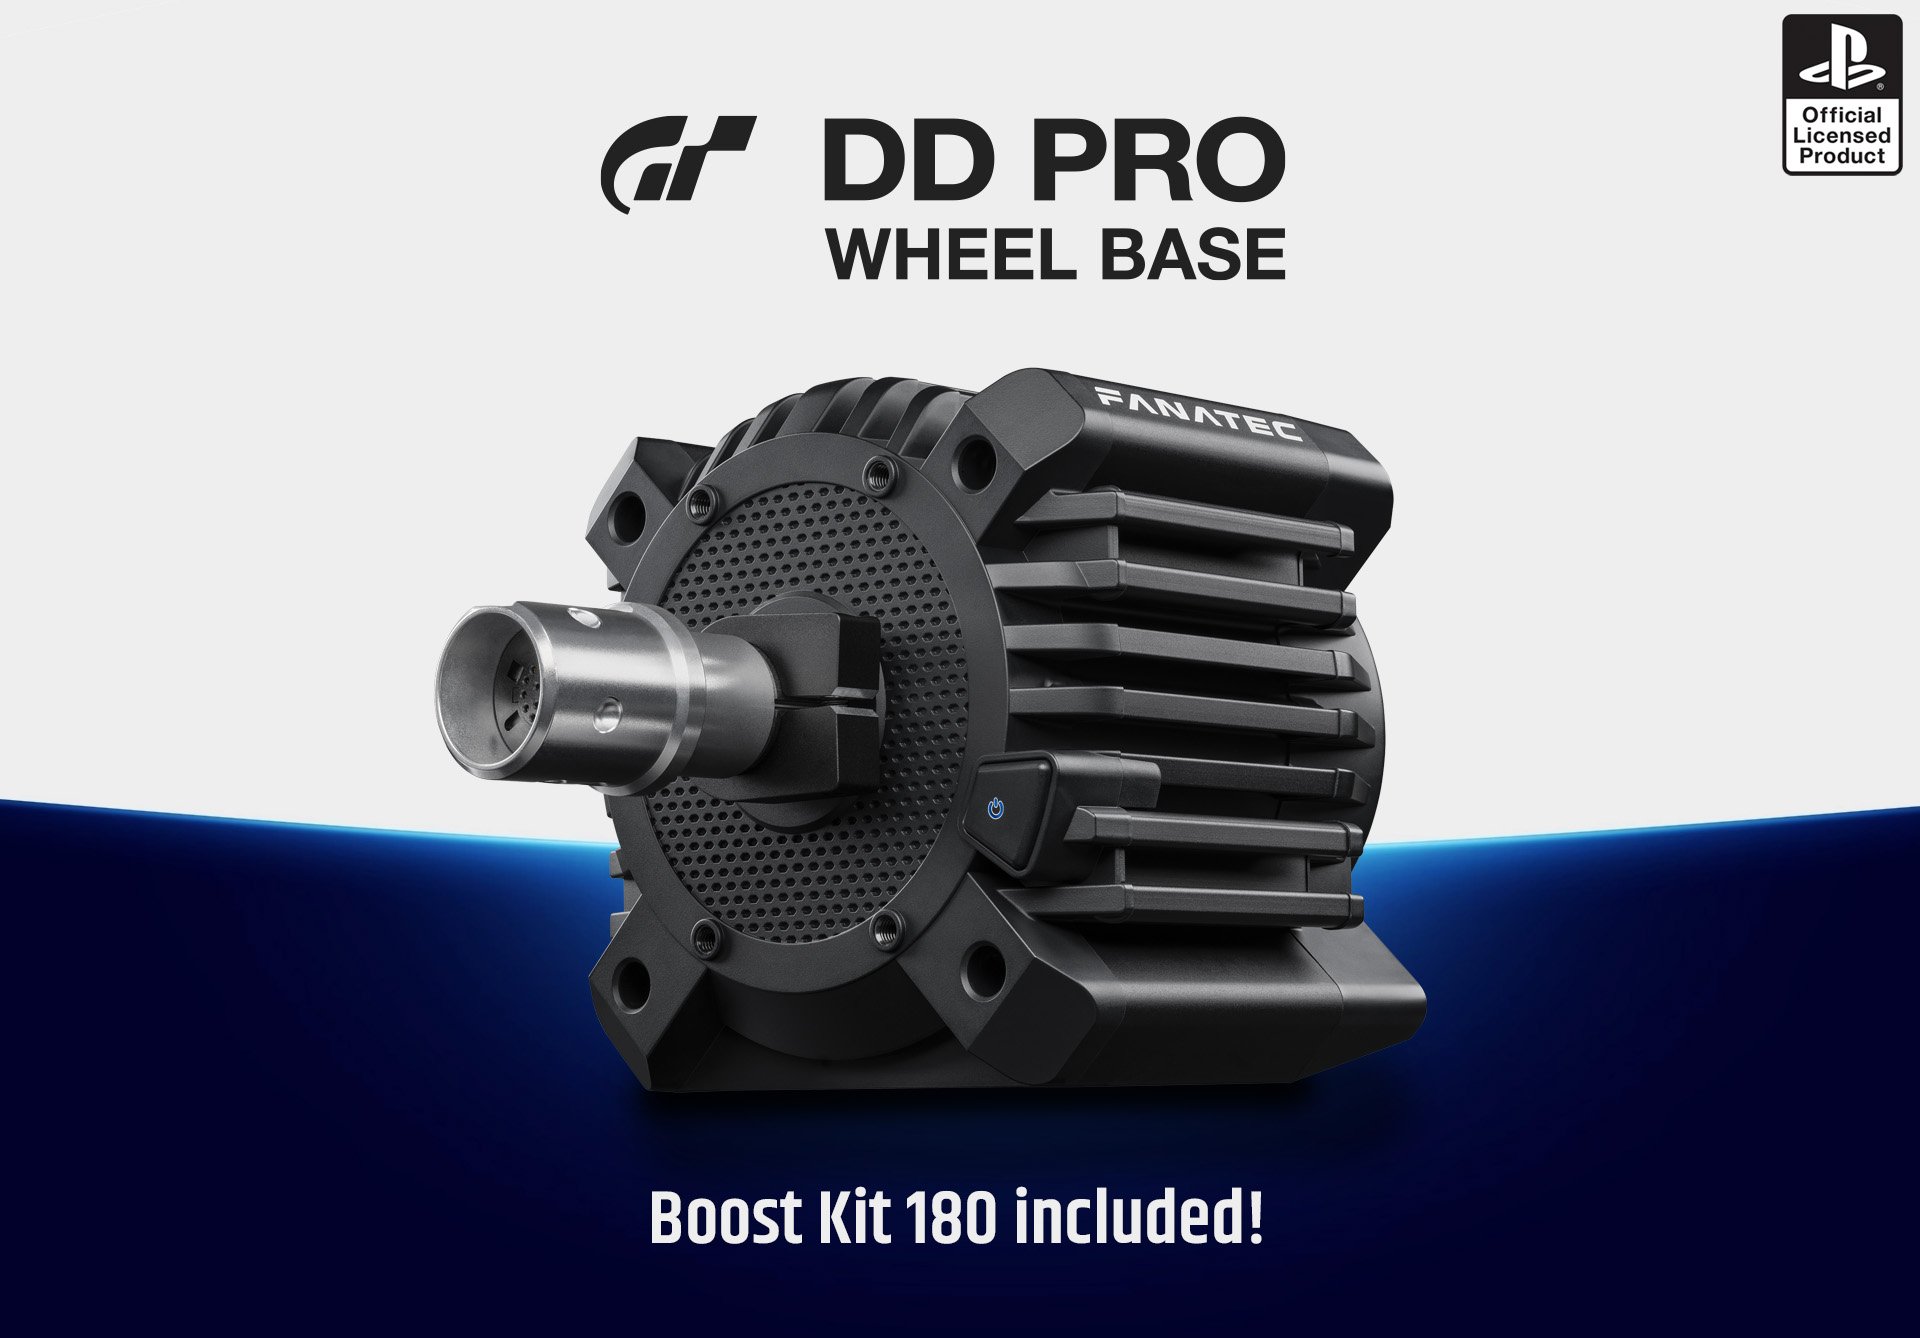 More information about "Gran Turismo DD Pro Wheel Base by Fanatec disponibile"